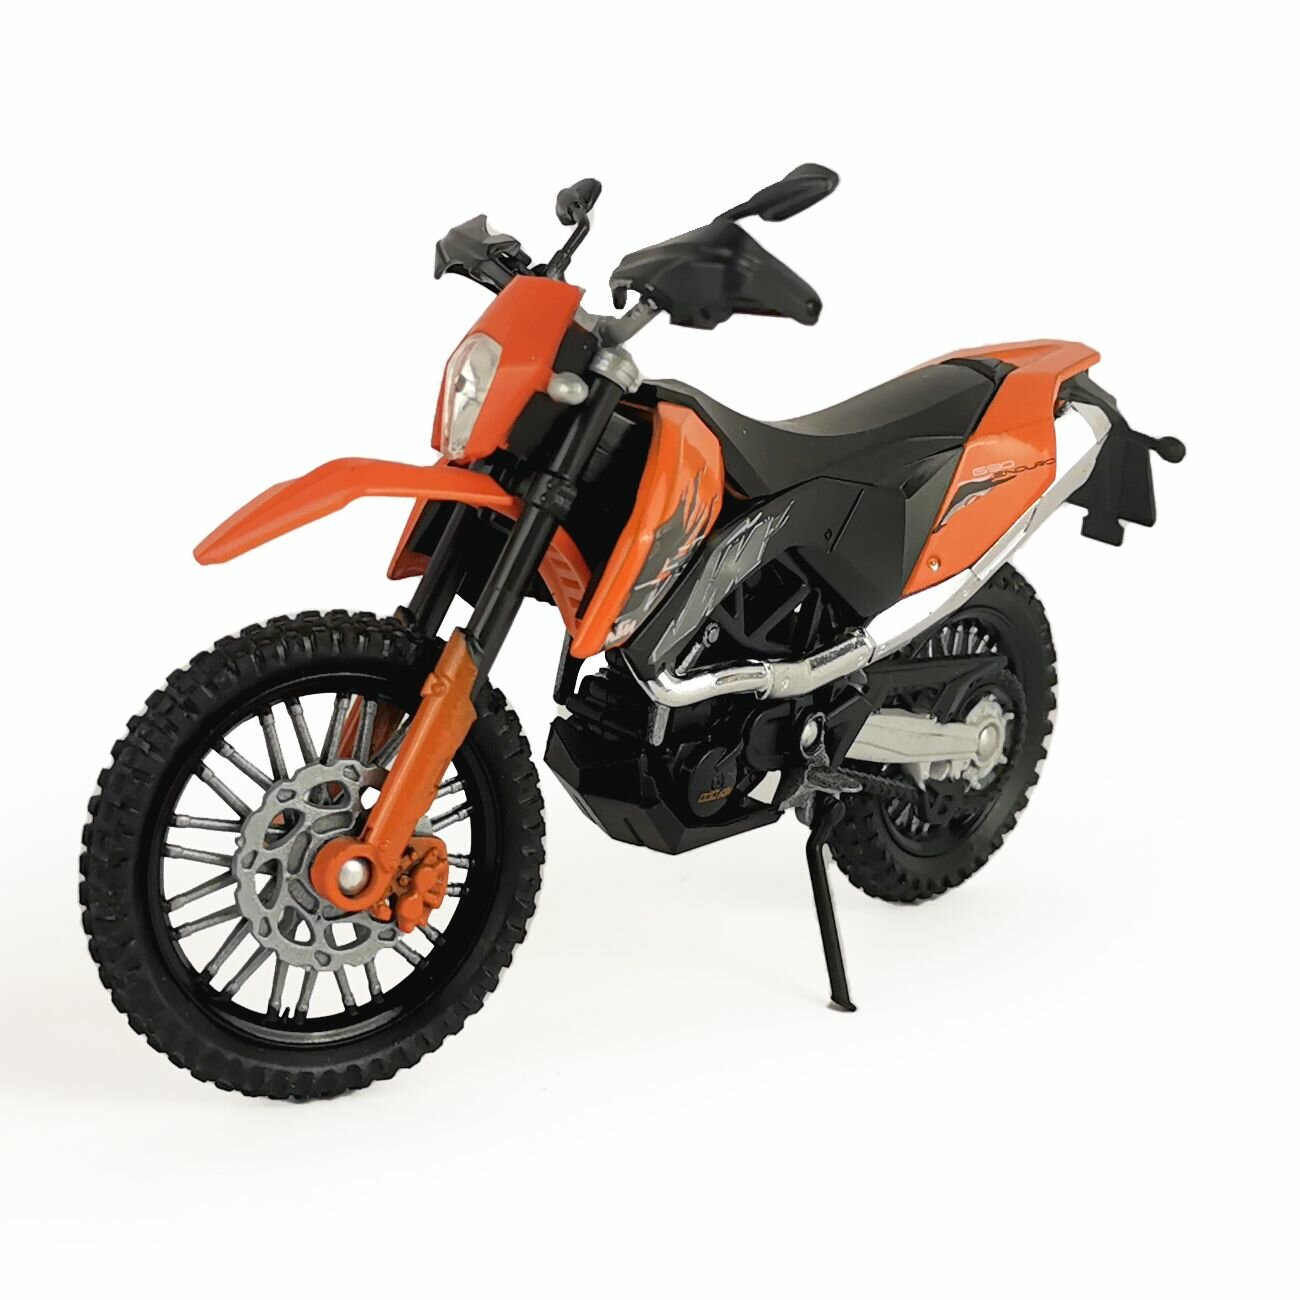 Мотоцикл WELLY 1:18 KTM 690 Enduro R оранжевый